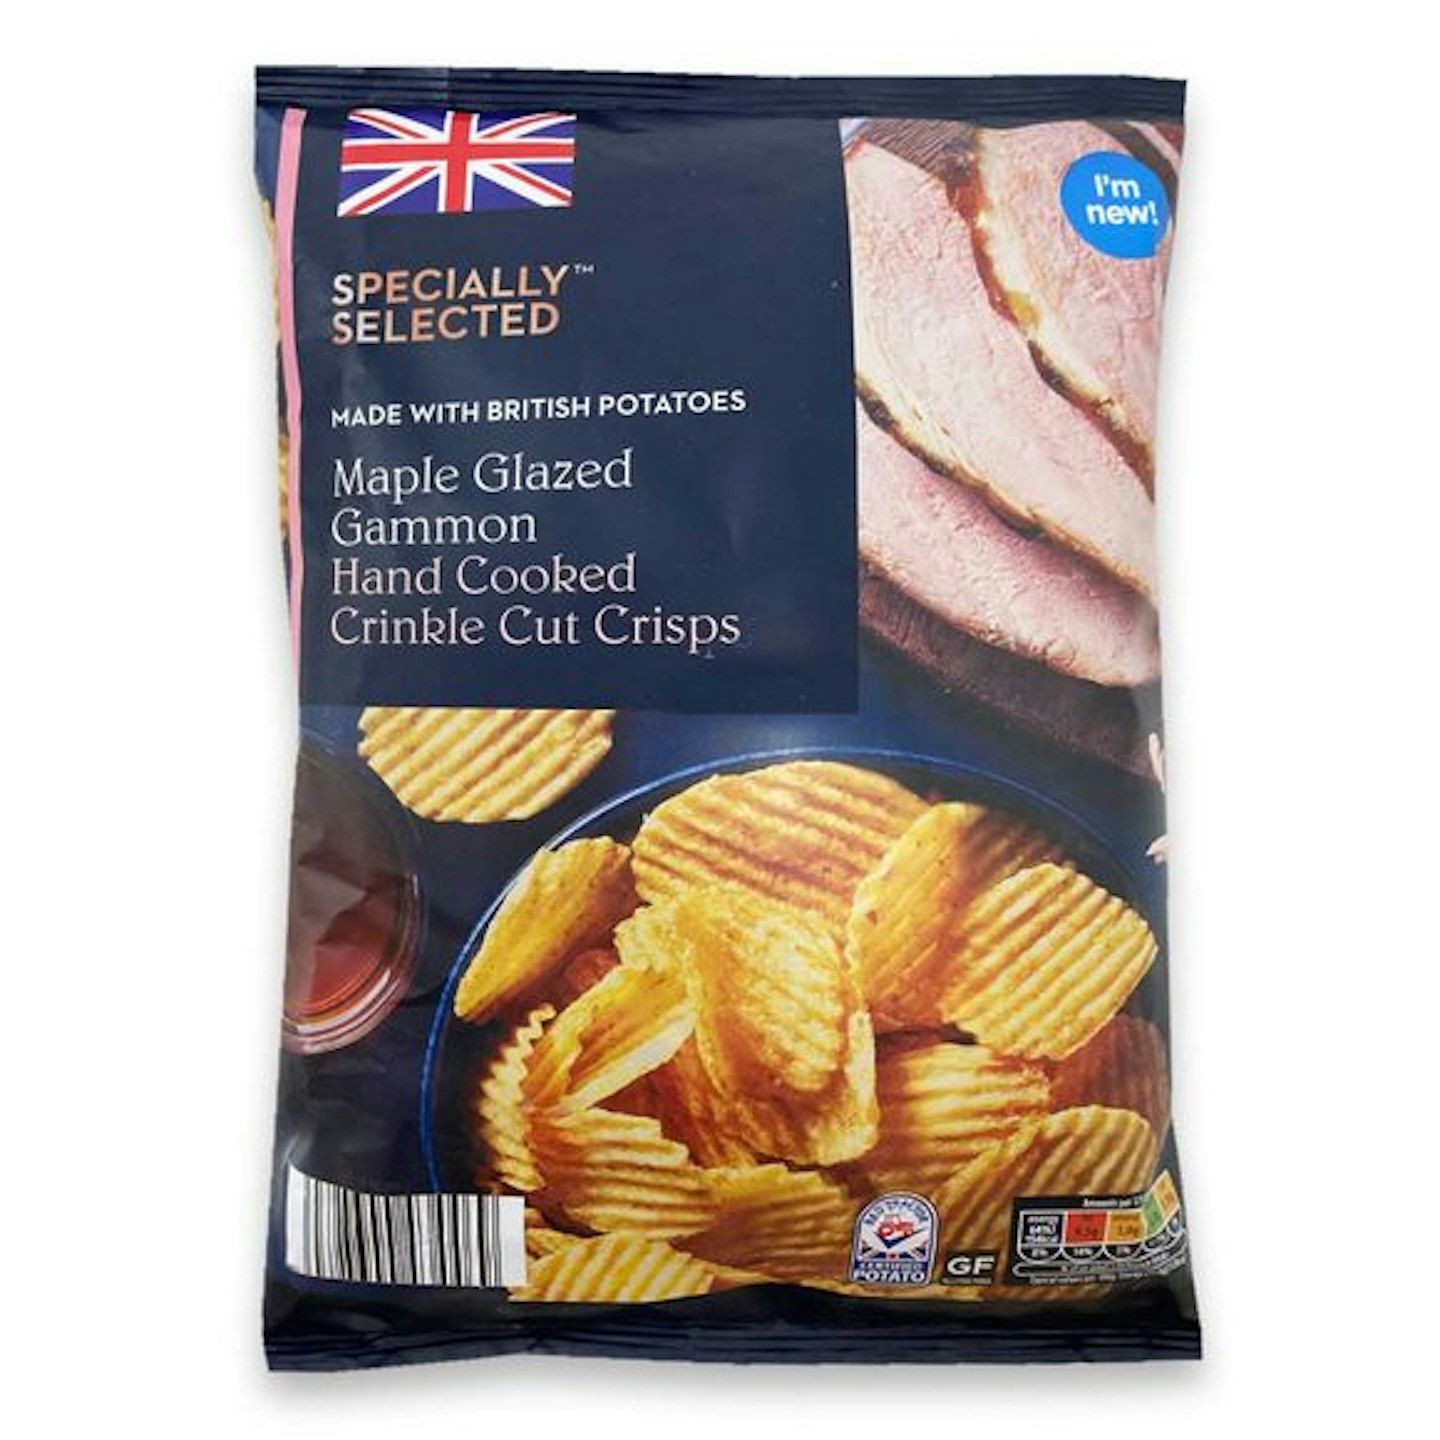 Aldi, Specially Selected Maple Glazed Gammon Crinkle Cut Crisps, £1.05